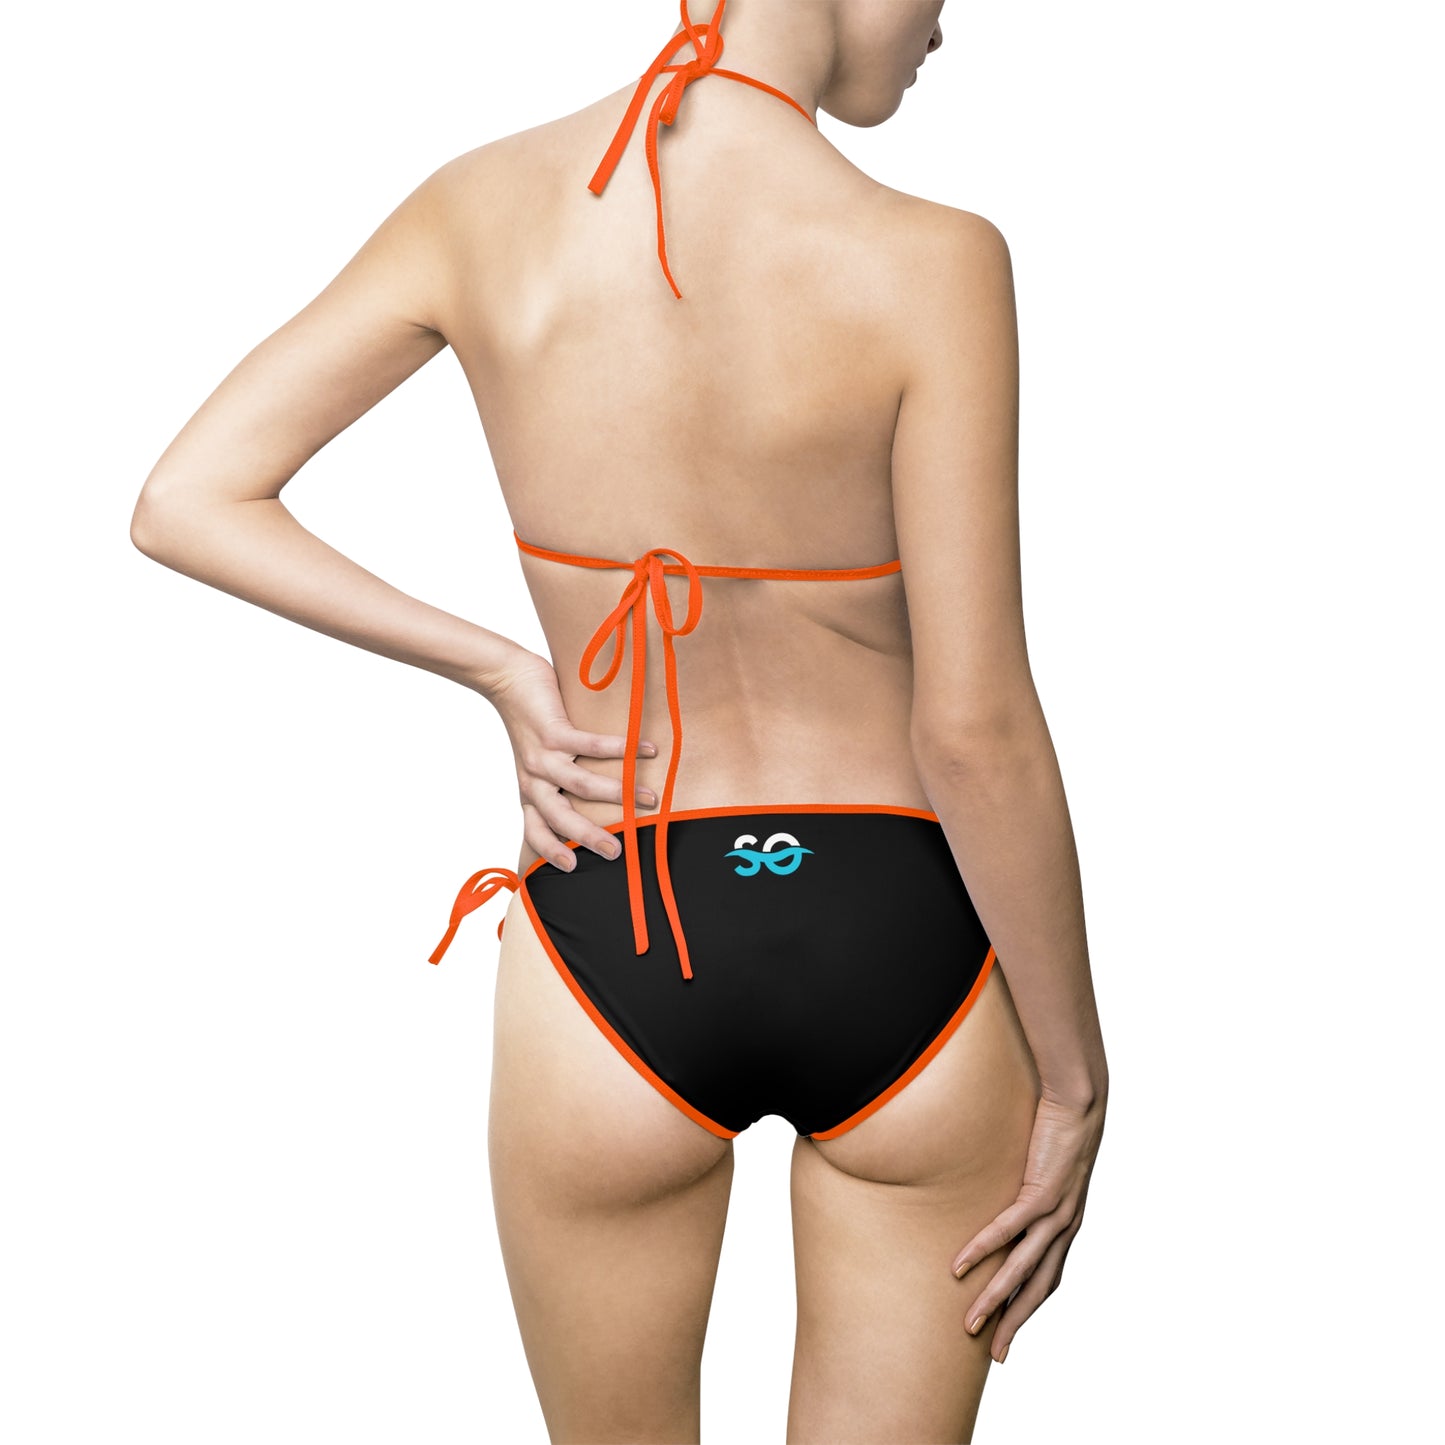 a woman in a black and orange bikini bottom